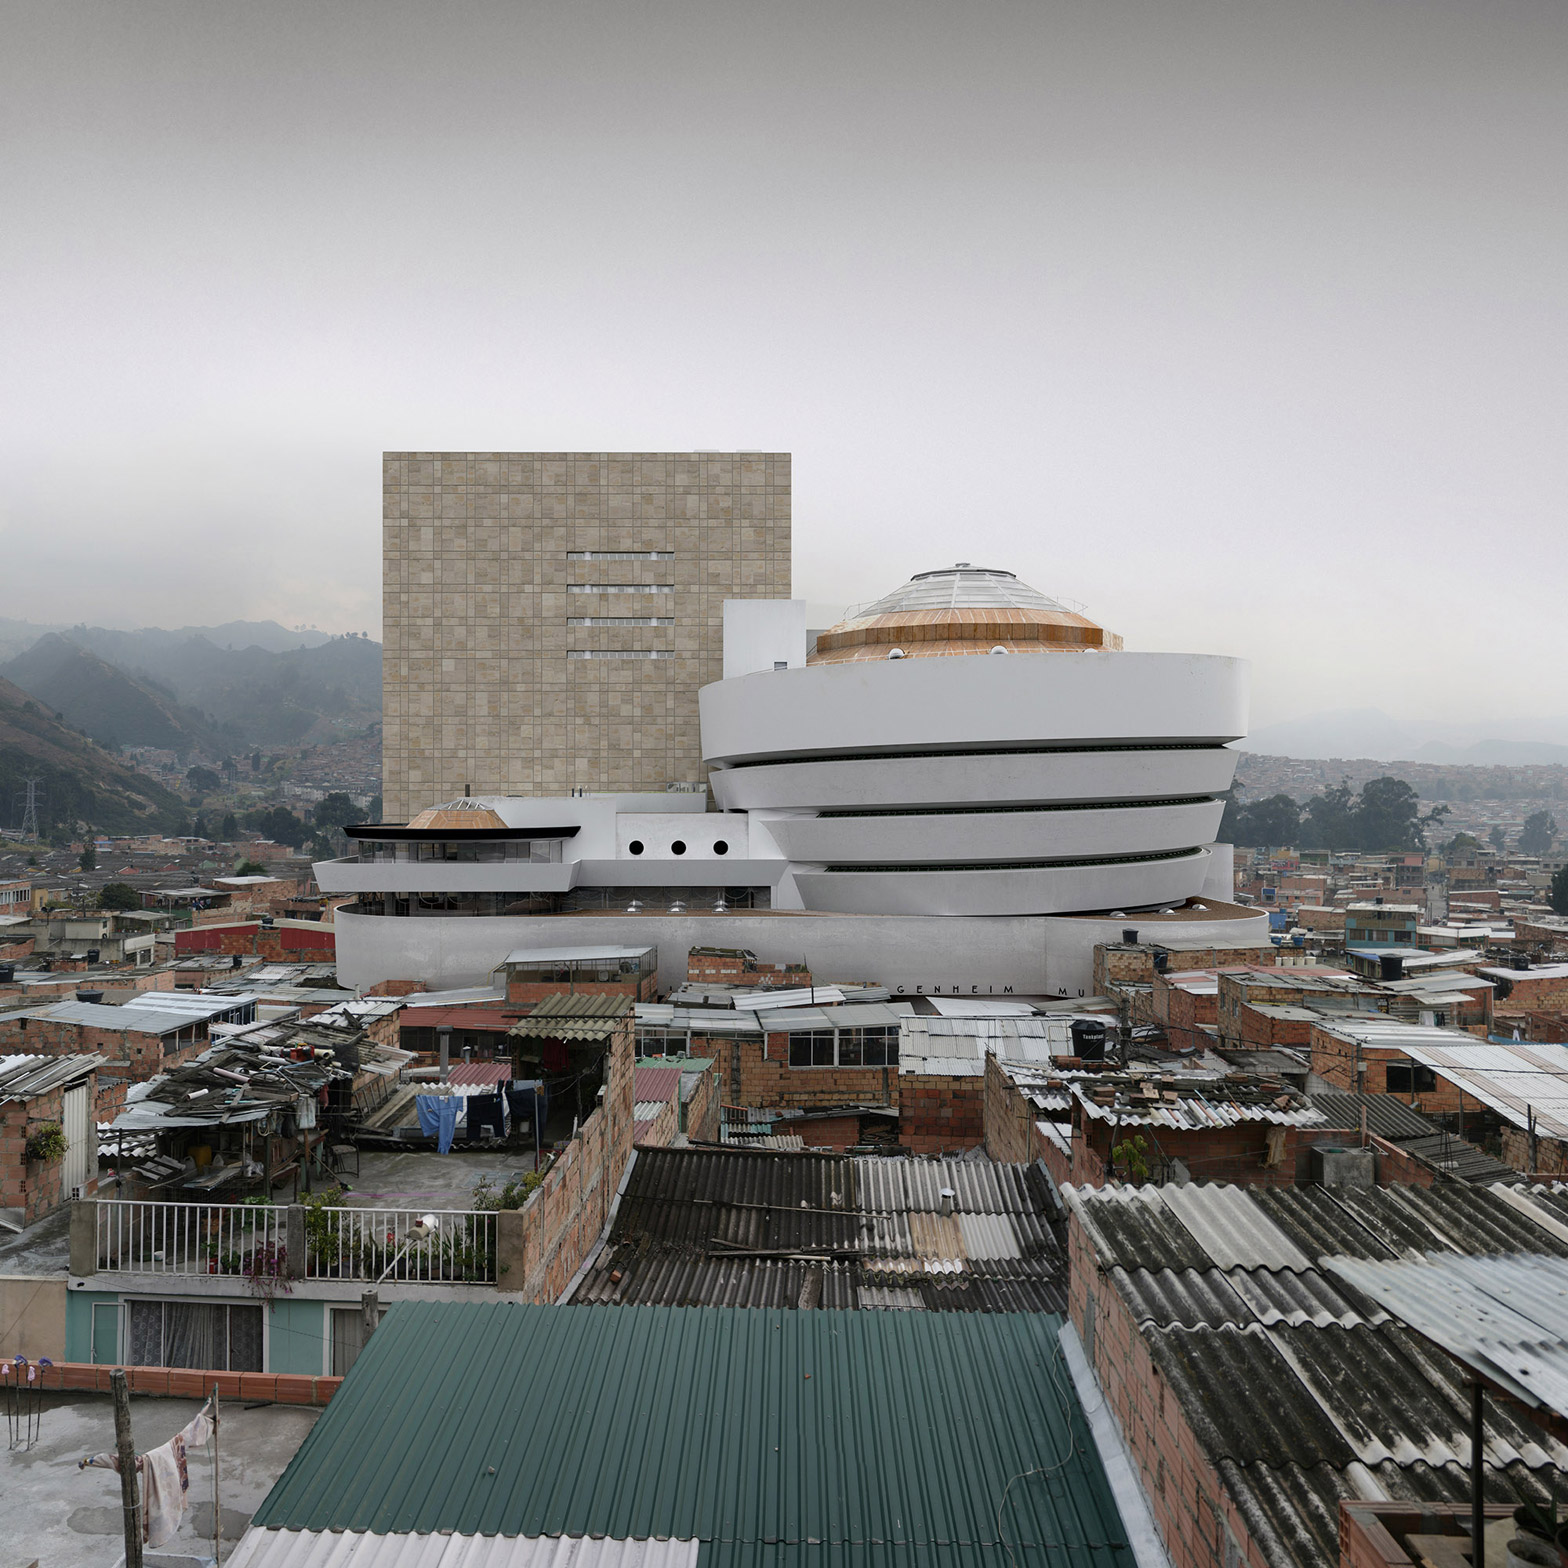 Porn town in Bogota